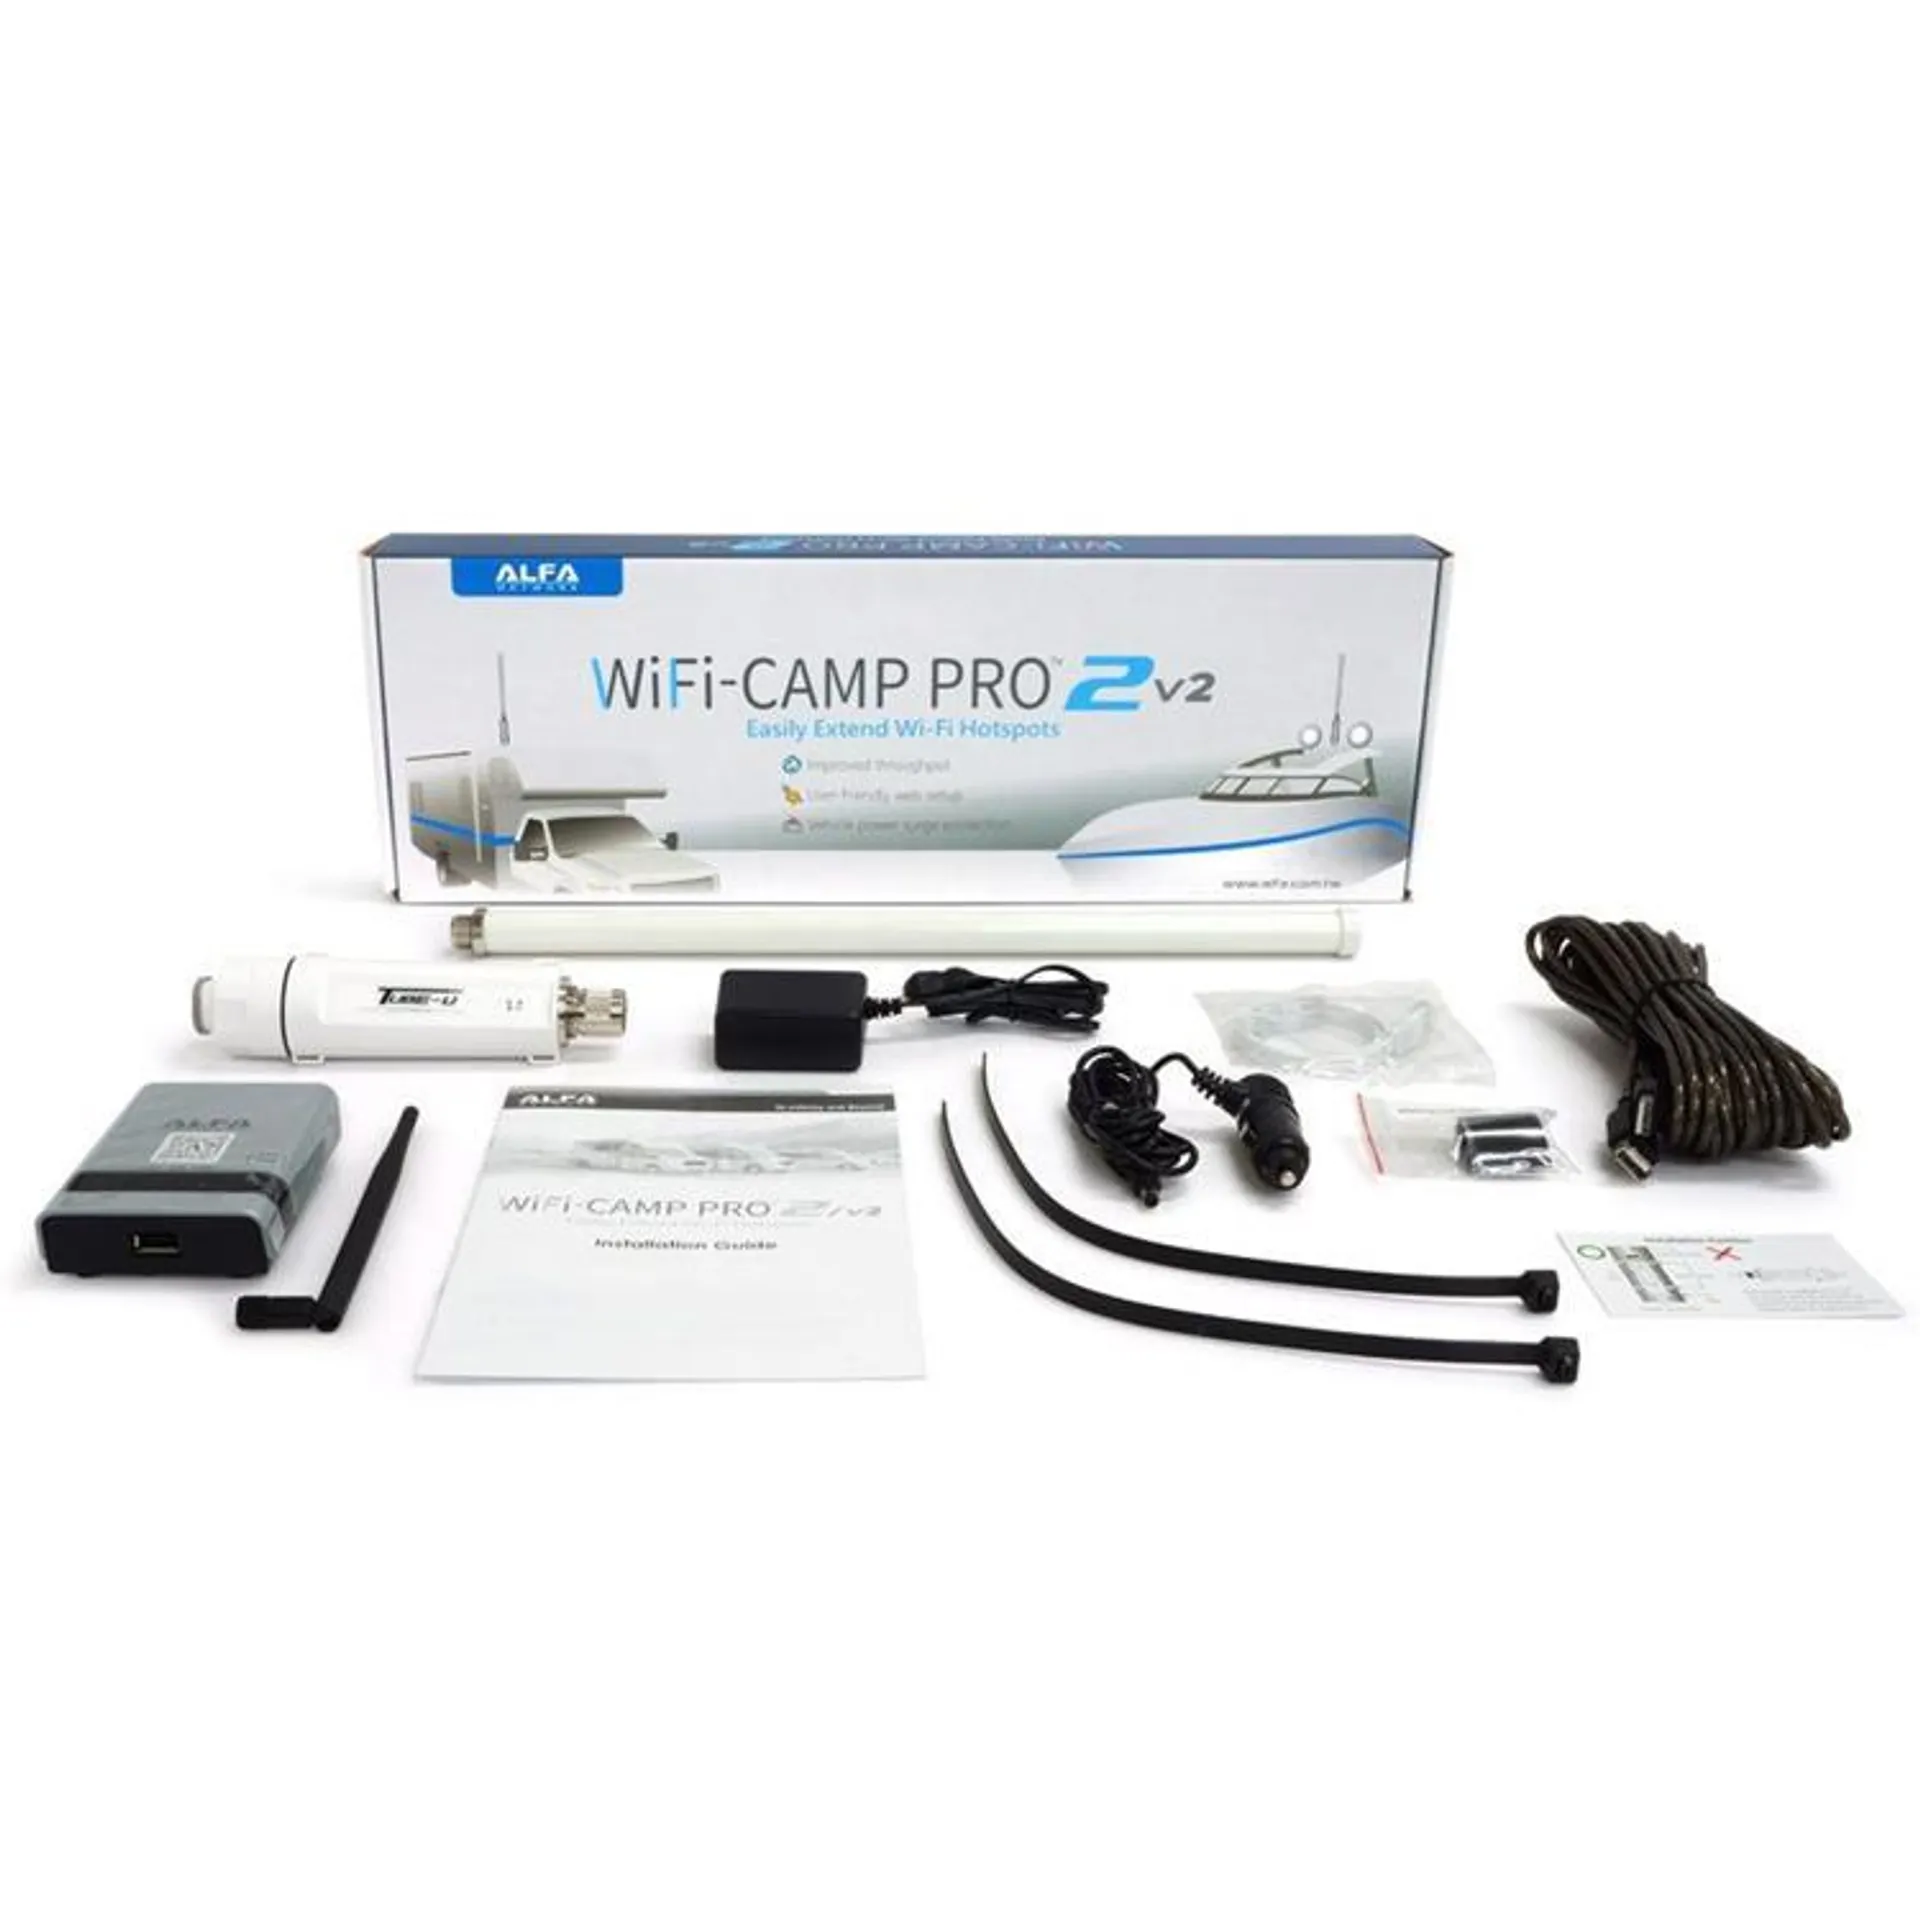 ALFA Network Wifi Camp Pro 2 V2